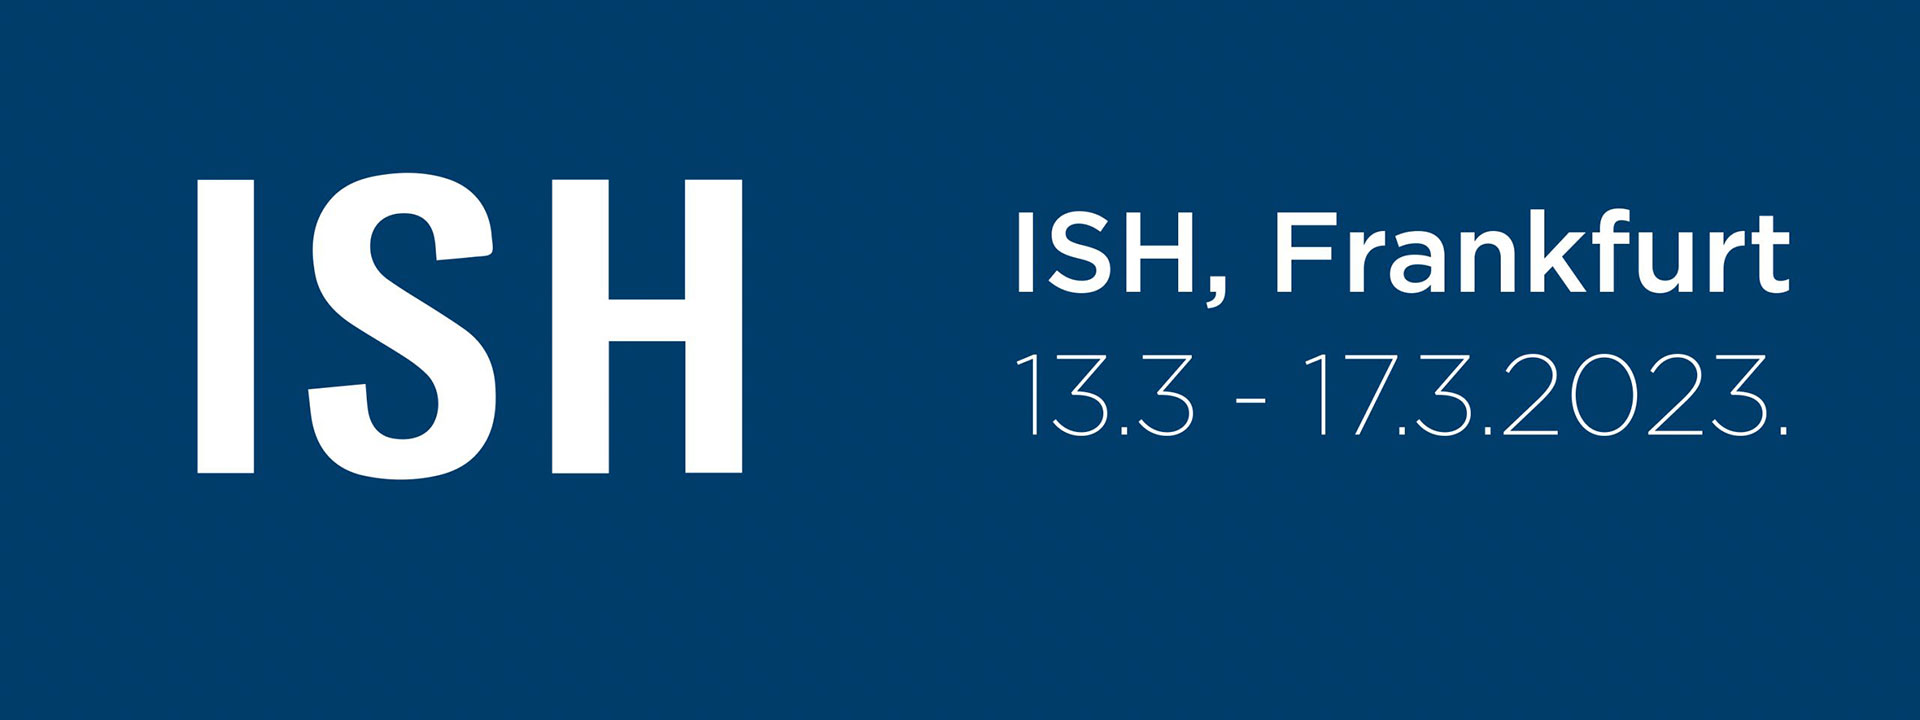 ISH 2023 exhibition ticket